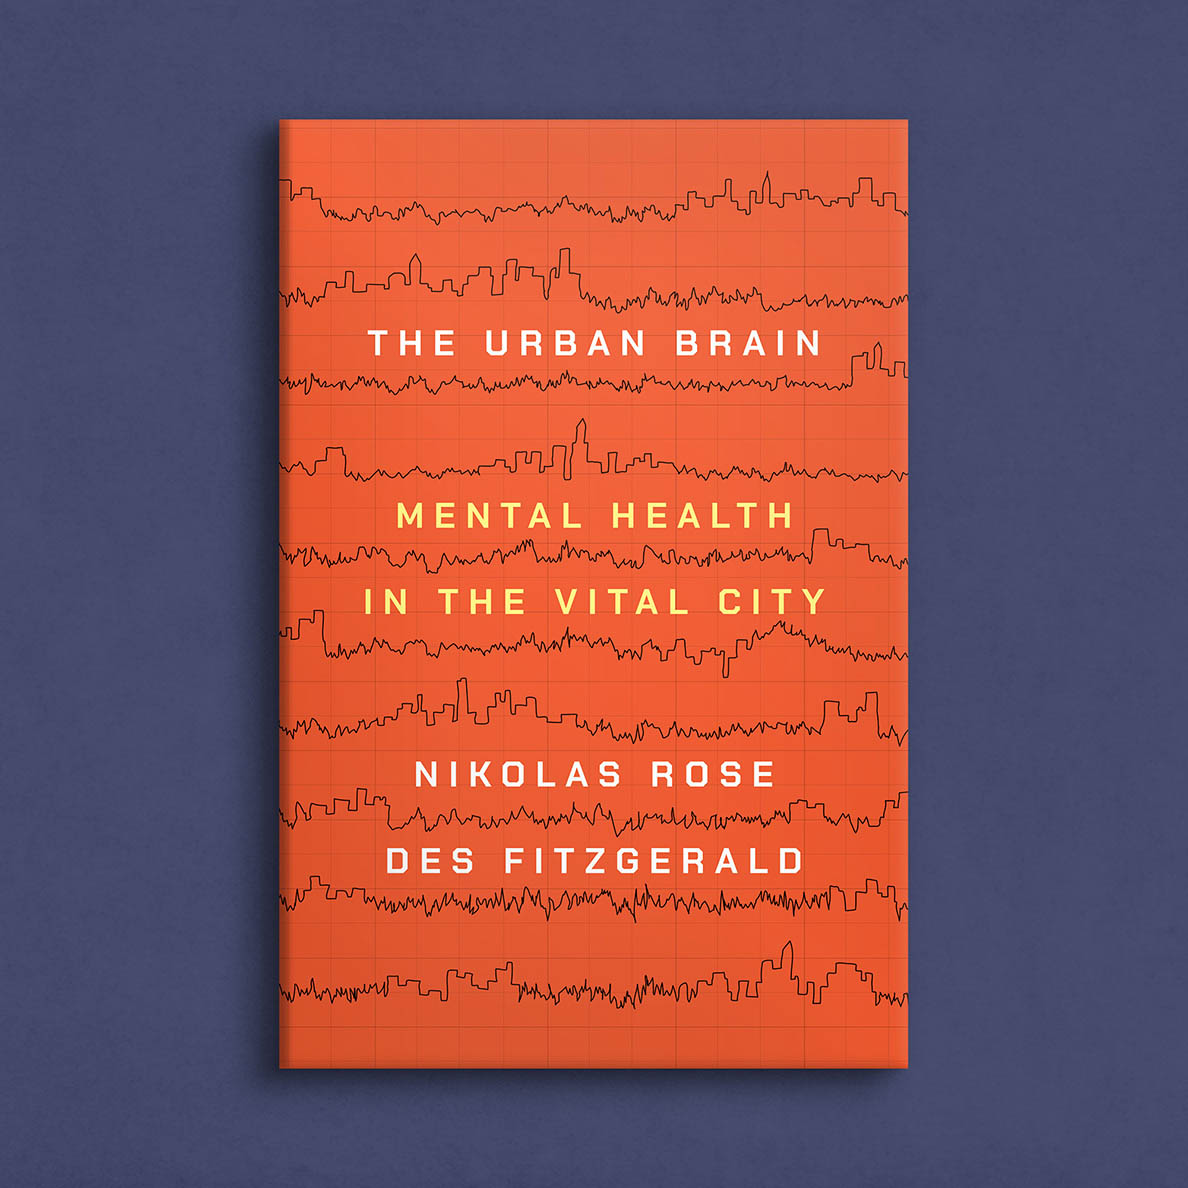 The Urban Brain book cover